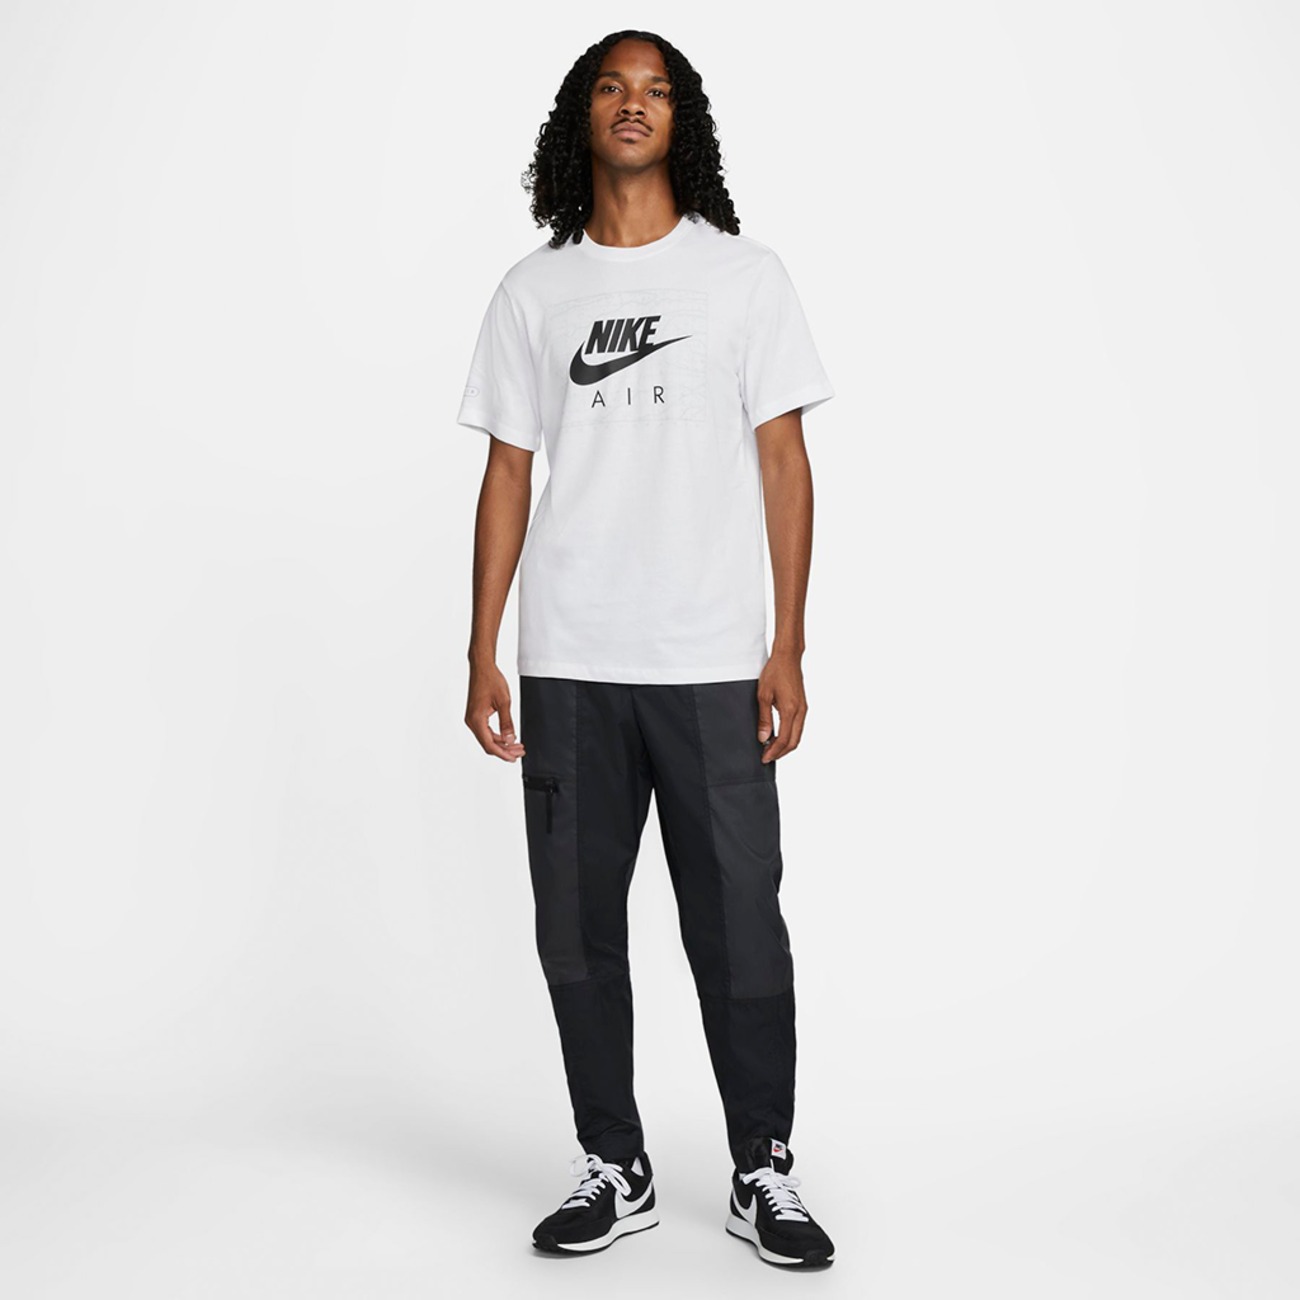 Camiseta Nike Air Masculina - Foto 9